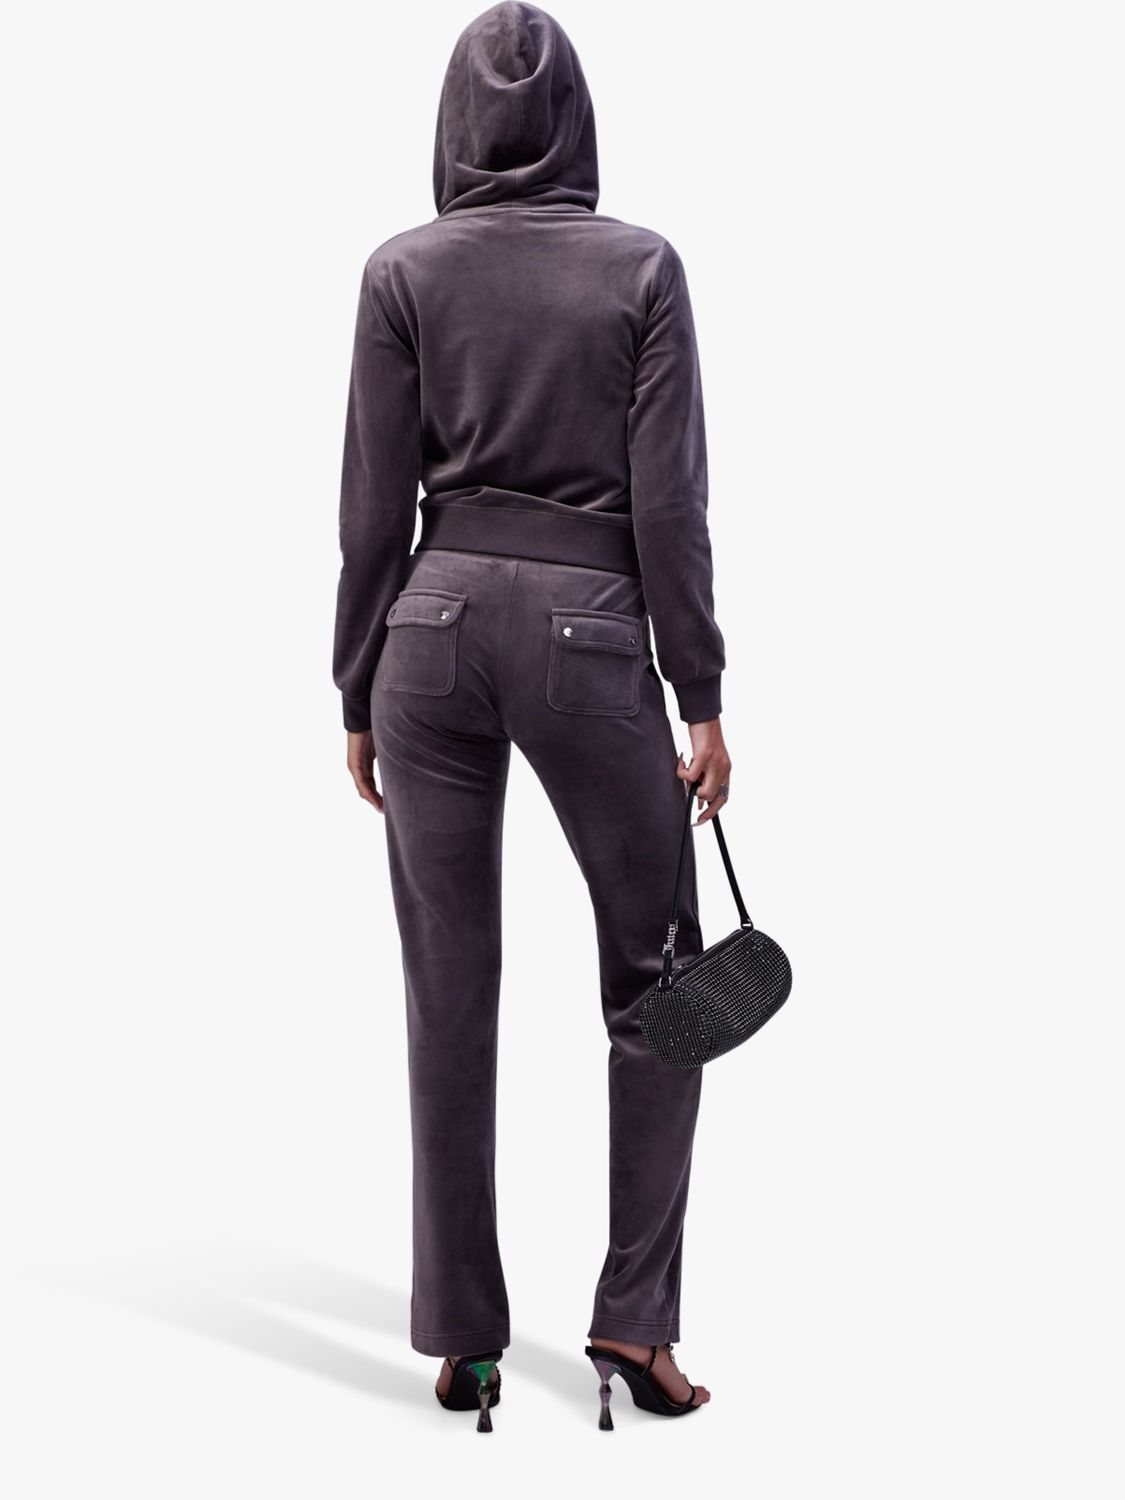 Buy Juicy Couture Classic Robertson Zip Through Hoodie Online at johnlewis.com